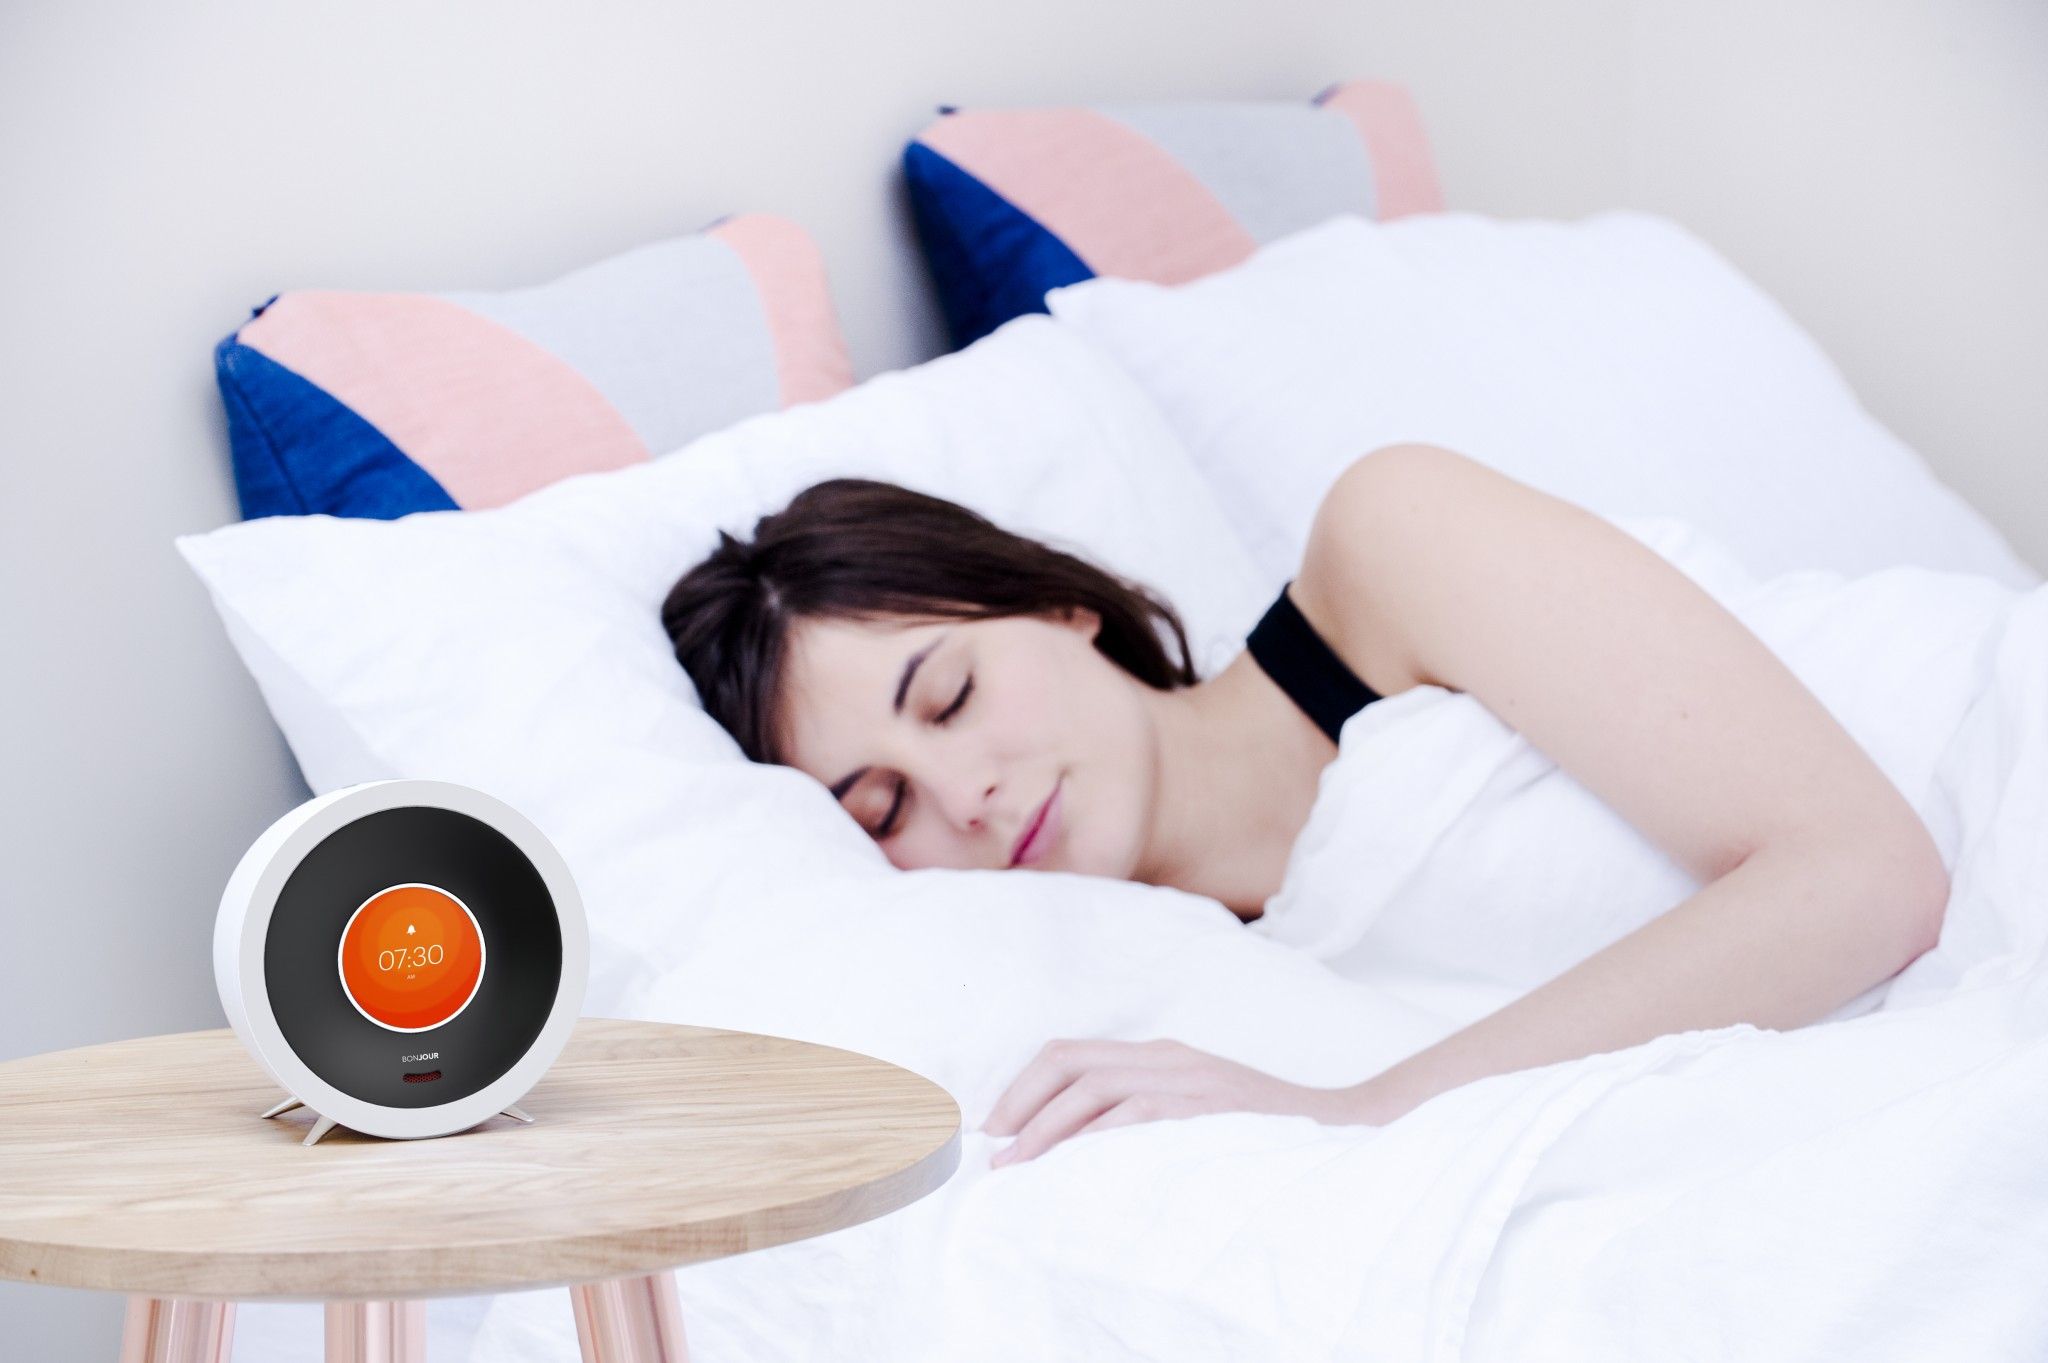 bonjour is a smart alarm clock that doubles as a personal assistant image 1